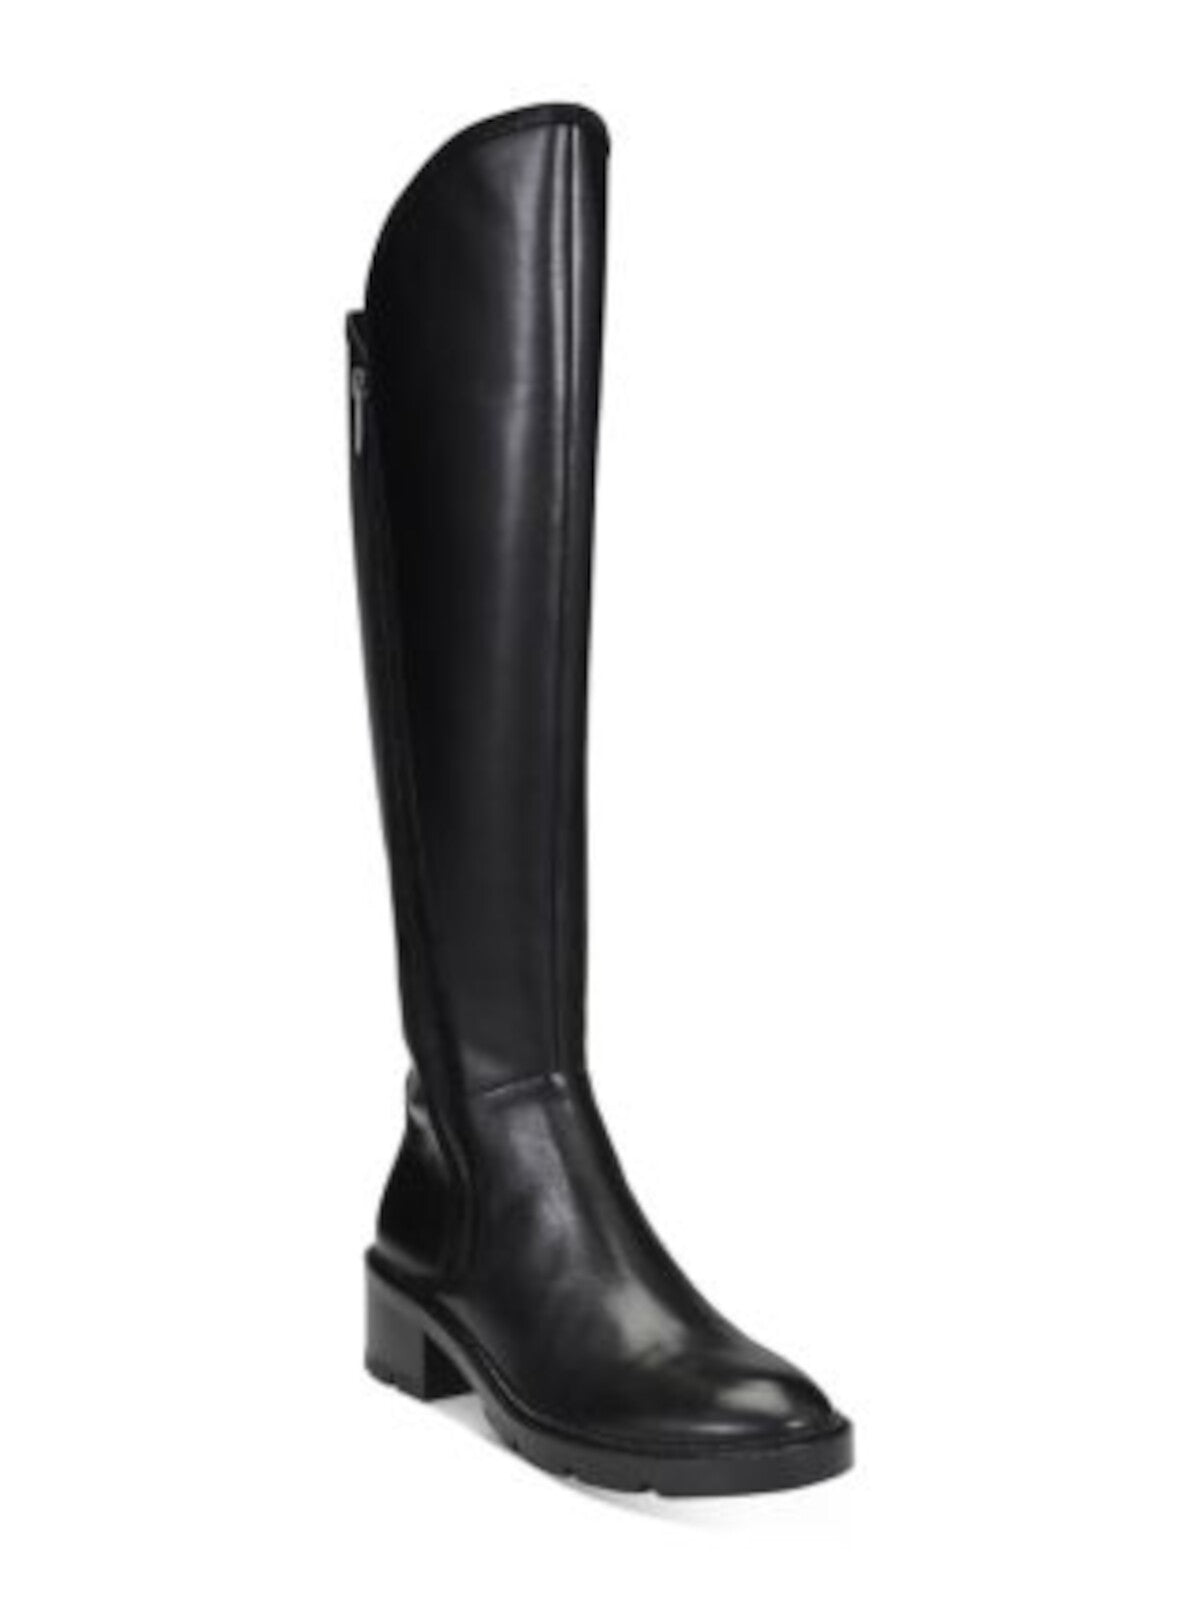 DONALD PLINER Womens Black Comfort Lug Sole Soffie Round Toe Block Heel Zip-Up Leather Boots Shoes 7 M